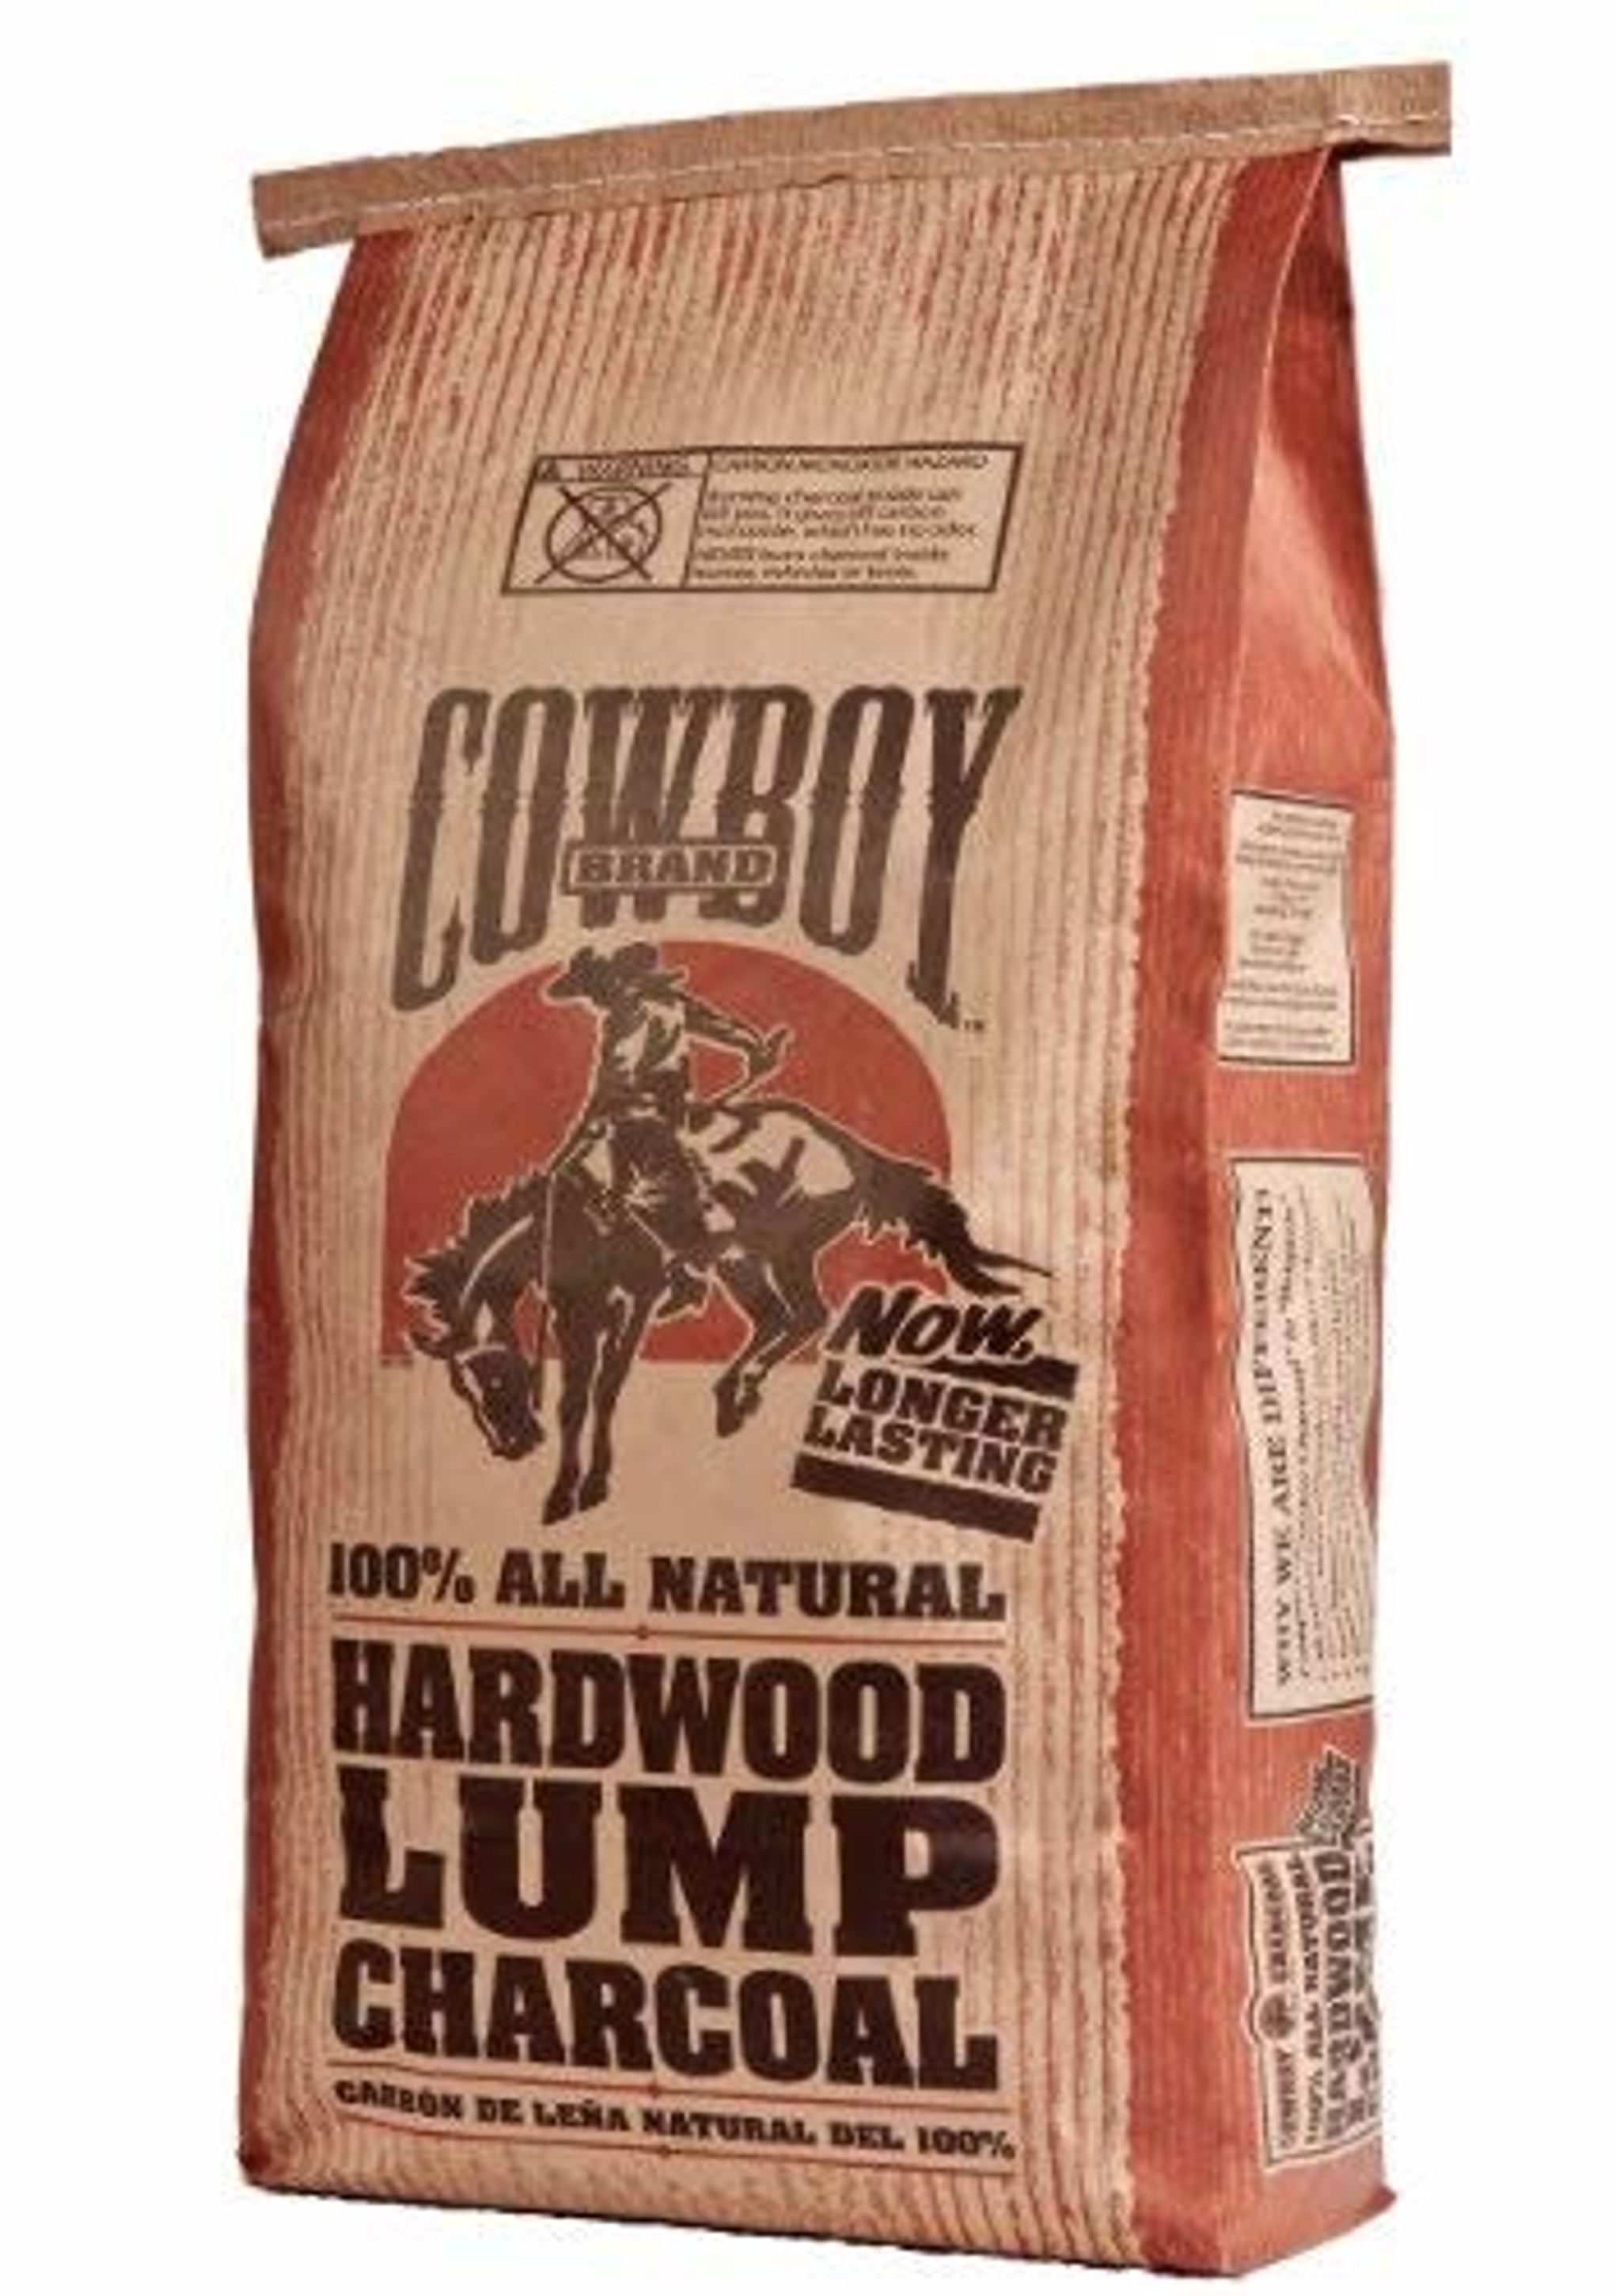 Cowboy All Natural Hardwood Lump Charcoal, Long Lasting, 20-Pound Bag